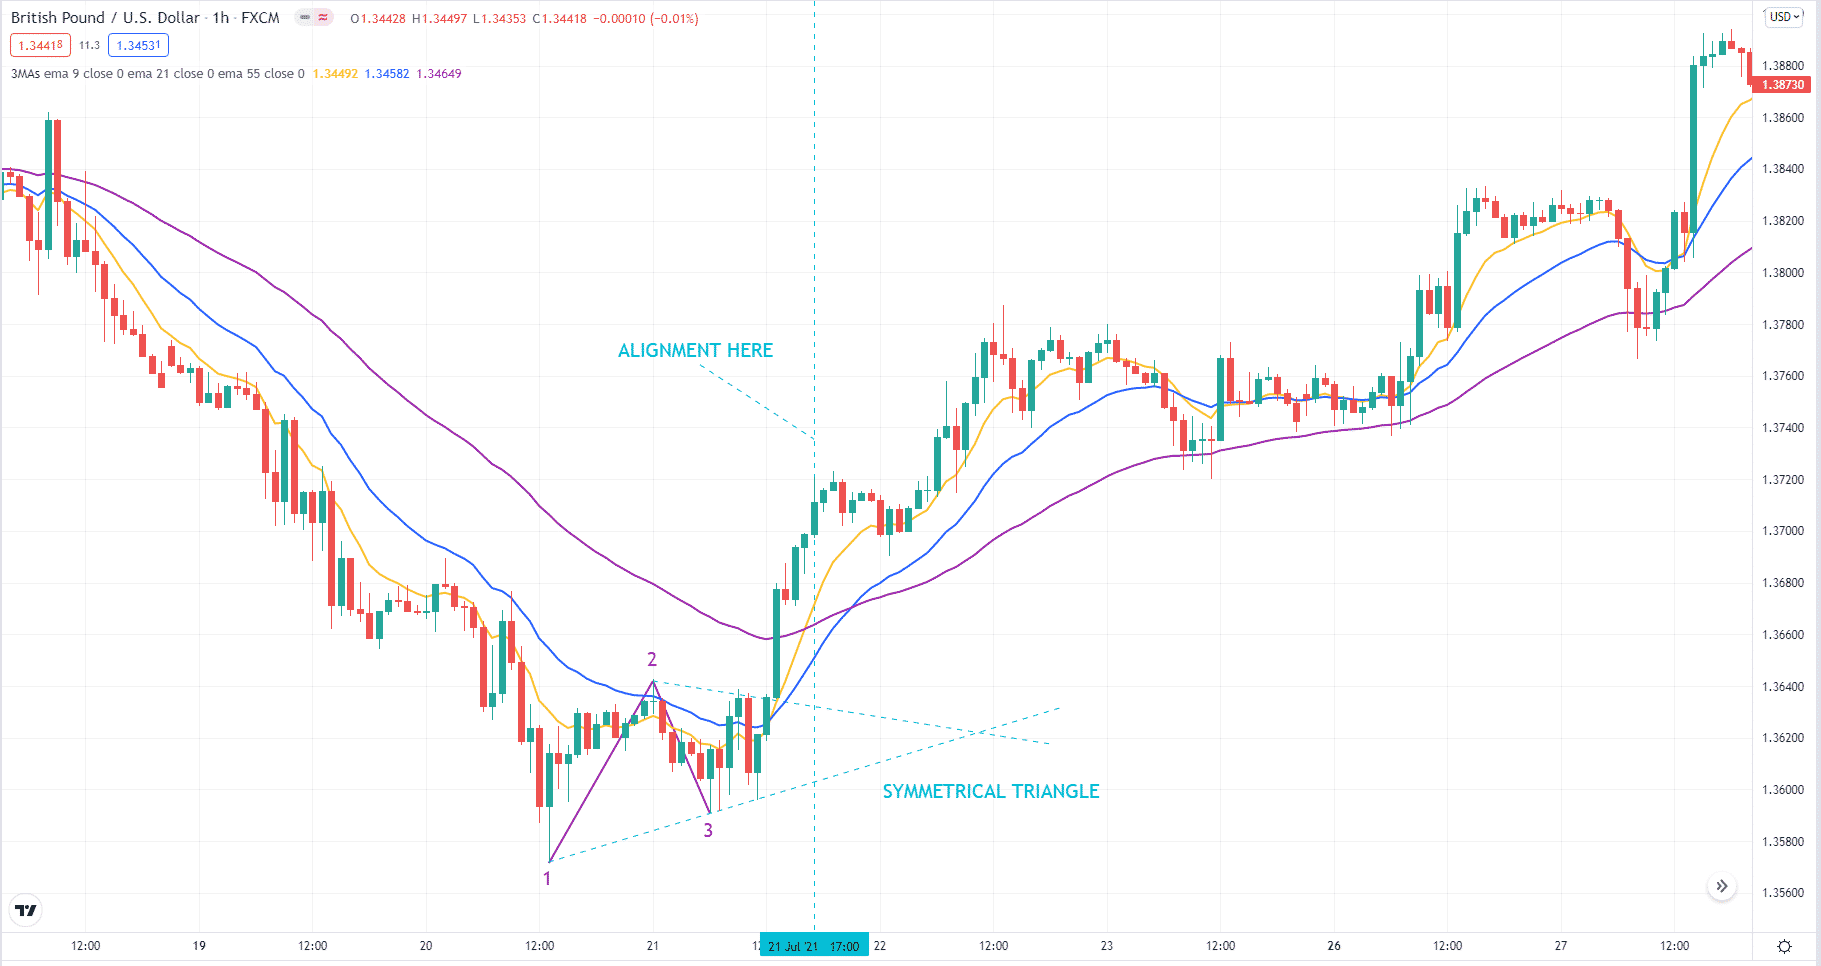 GBP/USD hourly chart